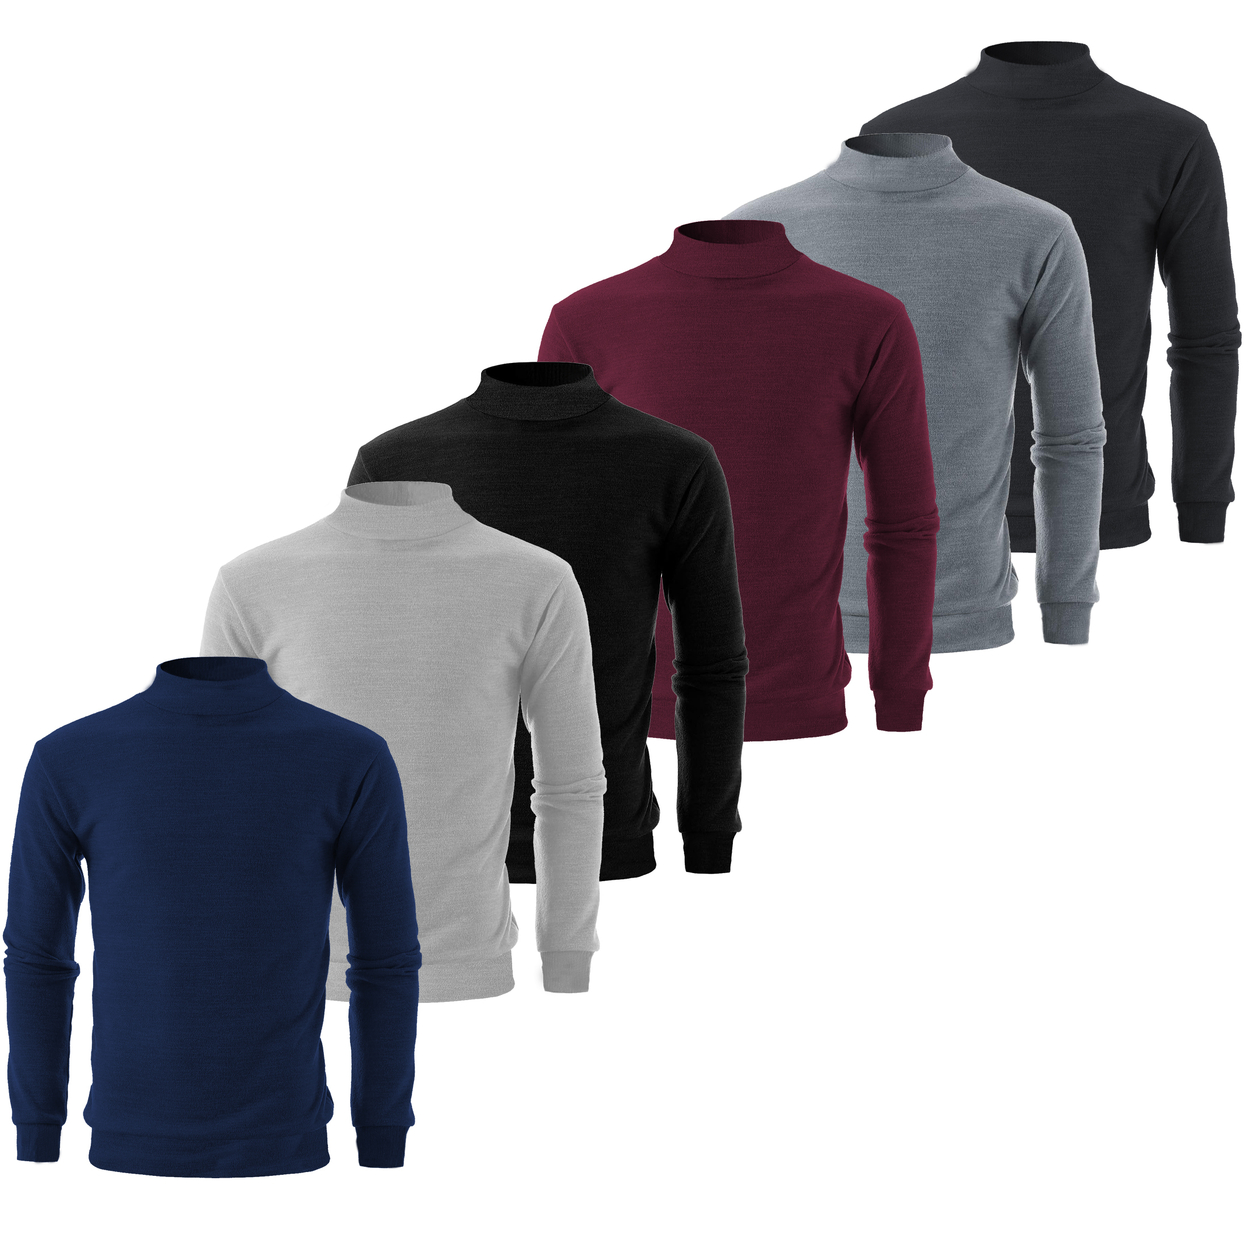 Men's Winter Warm Cozy Knit Slim-Fit Mock Neck Sweater - Grey, X-large